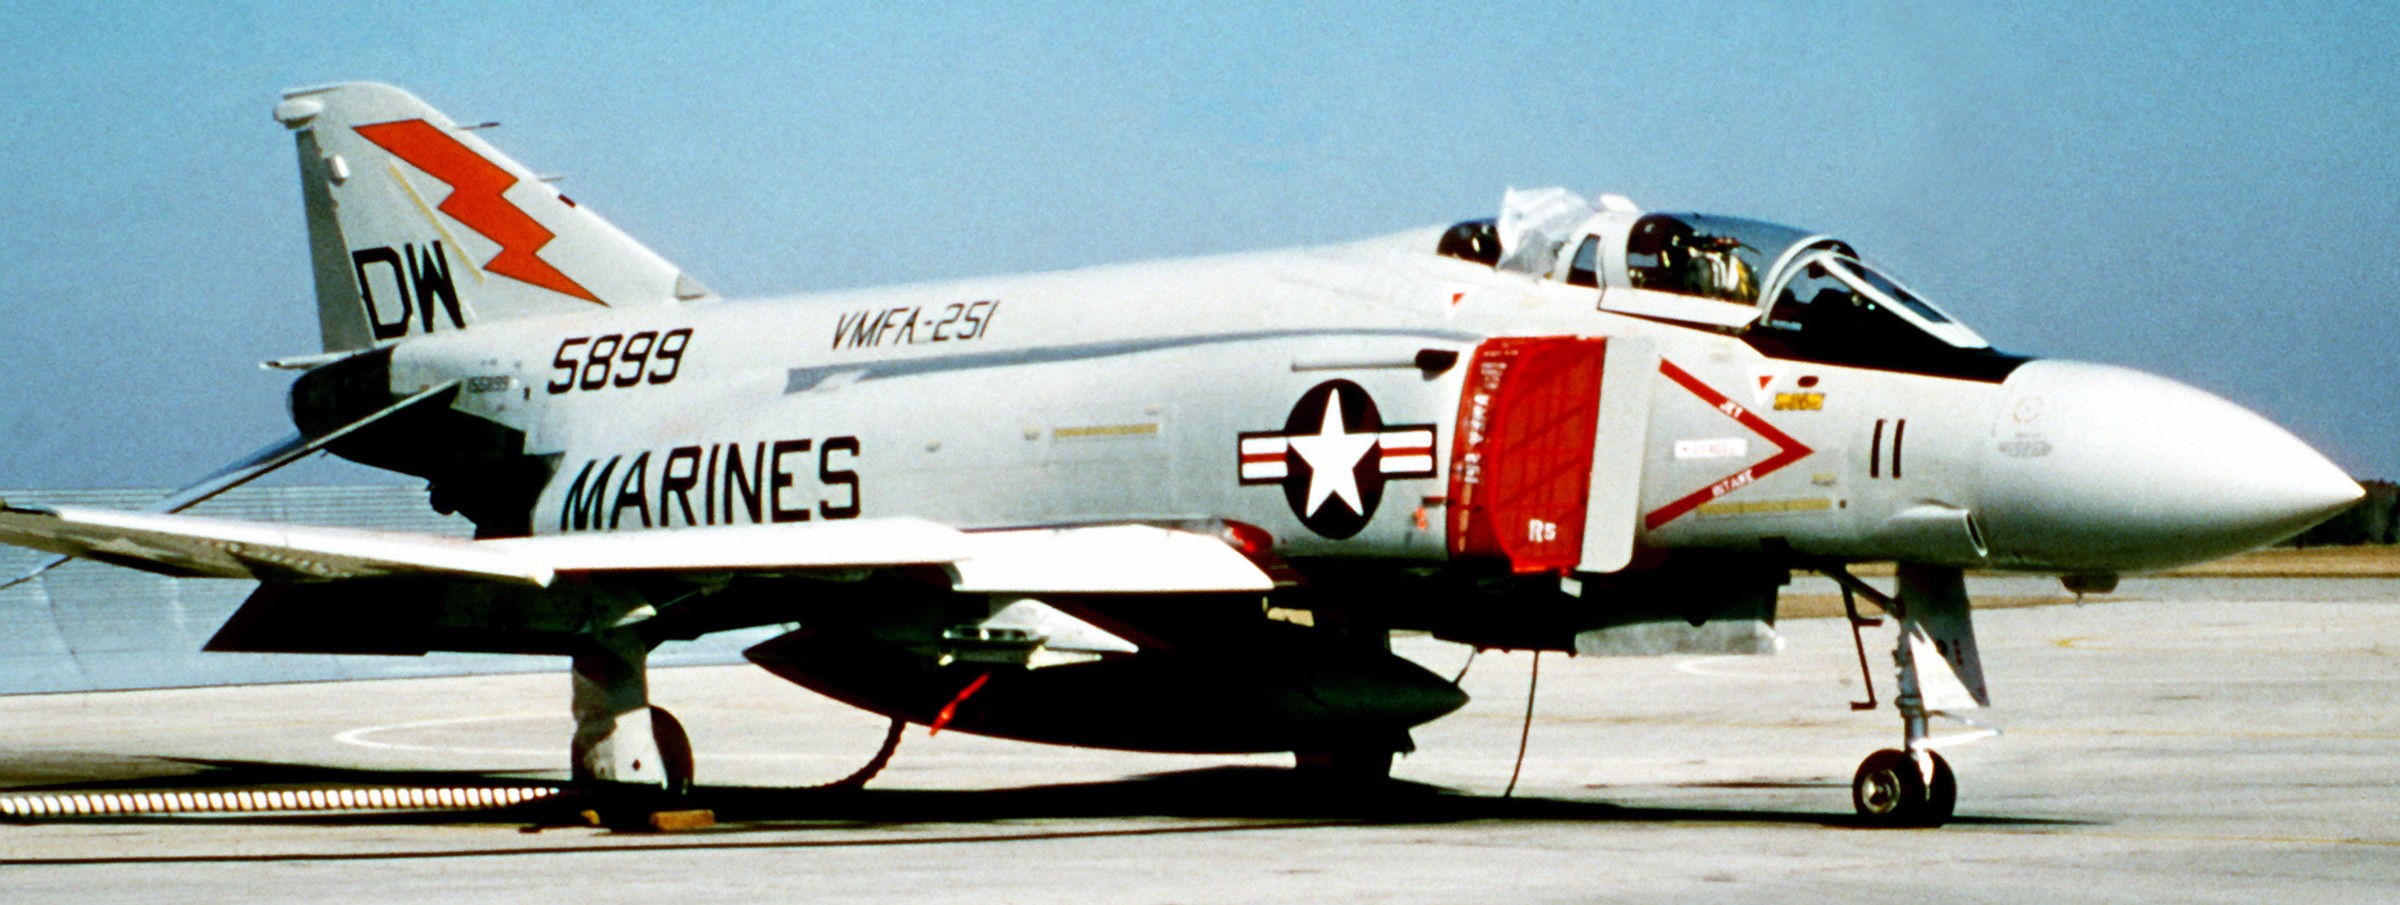 vmfa-251 thunderbolts marine fighter attack squadron f-4 phantom ii mcas cherry point north carolina 59